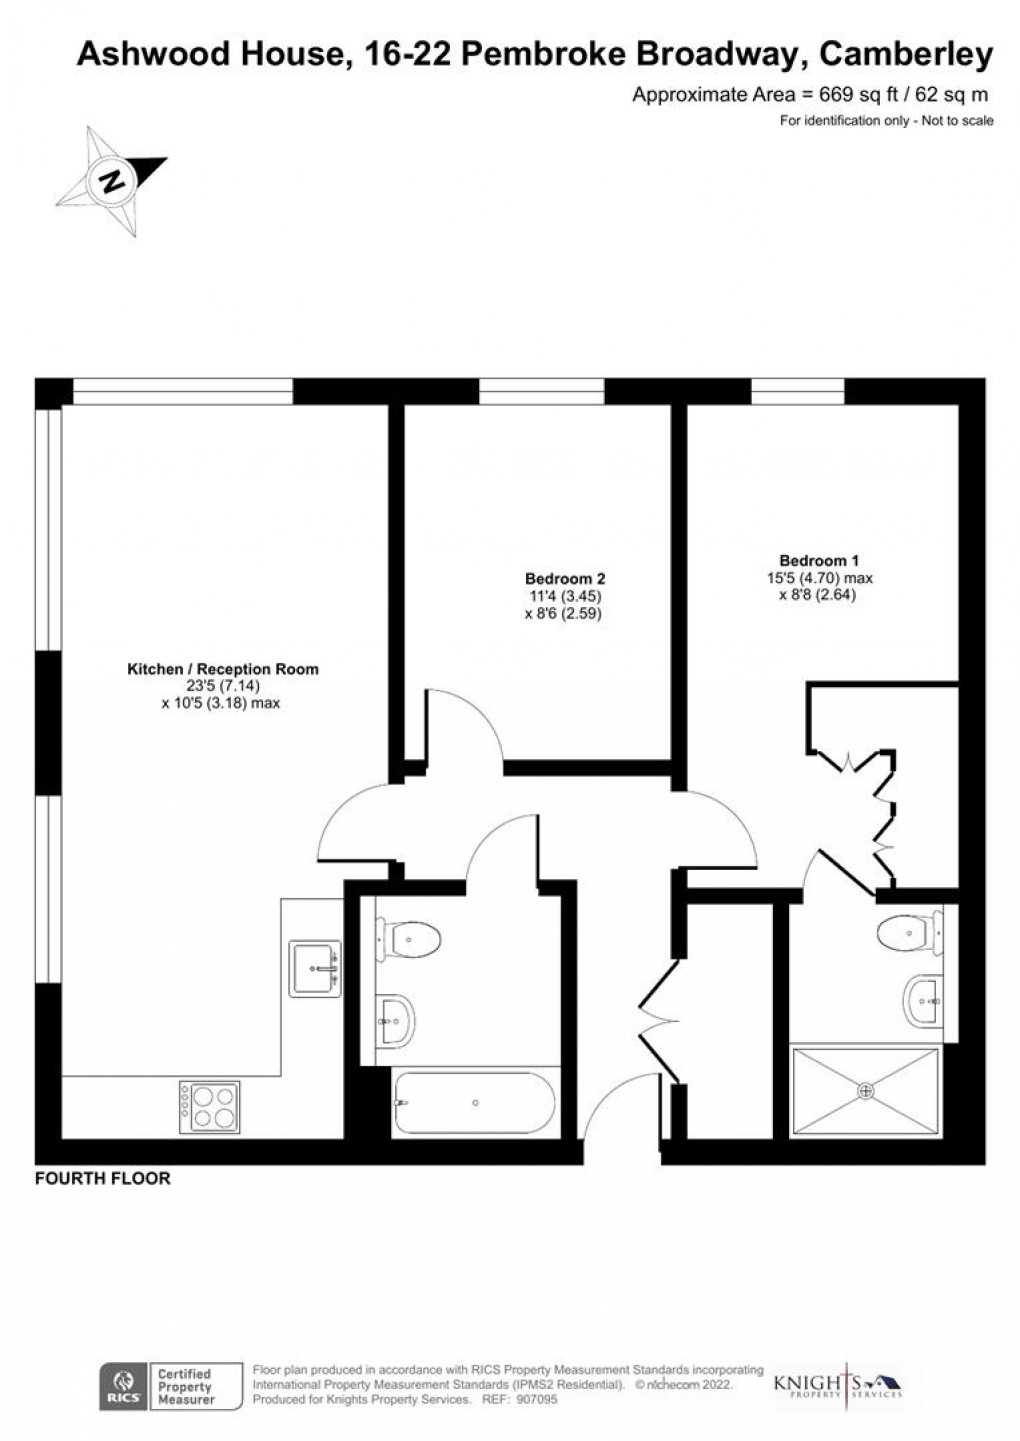 Floorplan for Ashwood House, 16-22 Pembroke B, Camberley